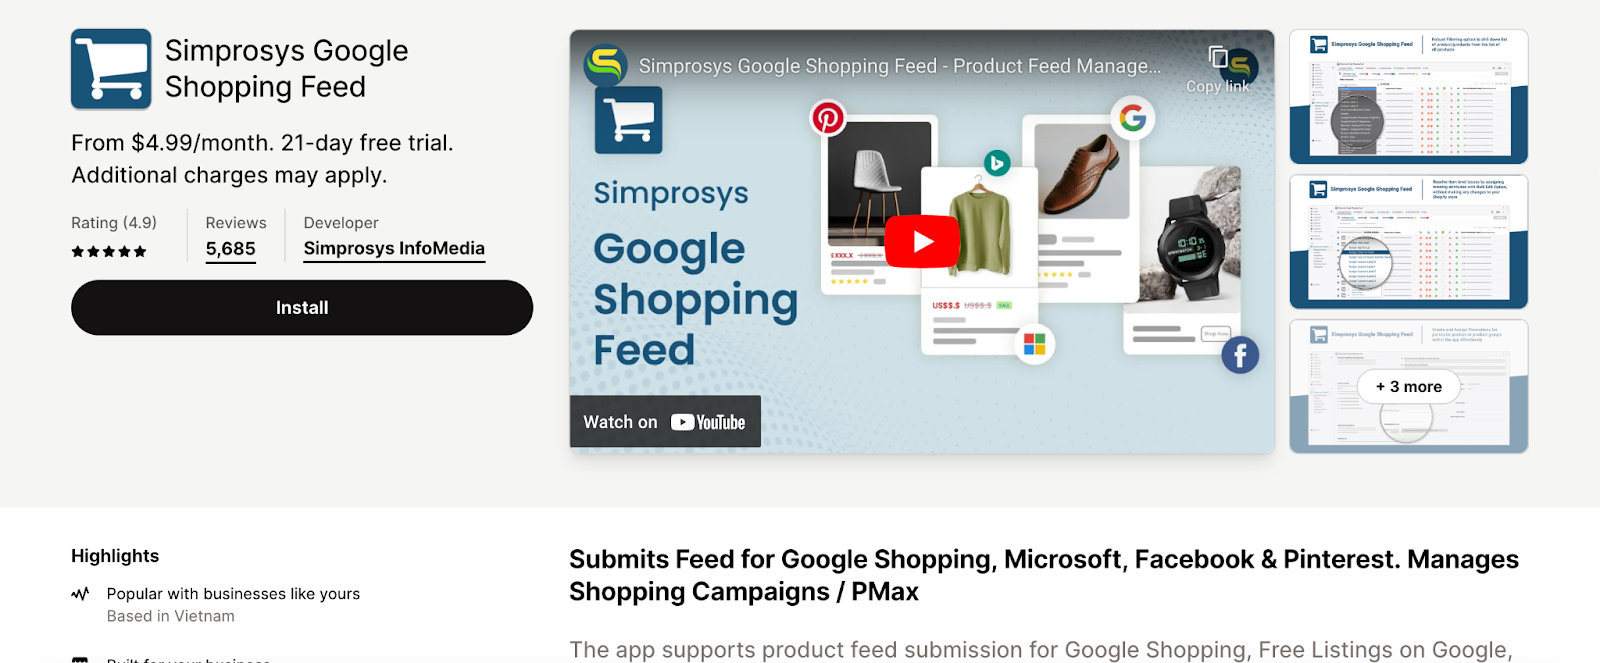 Simprosys Google Shopping Feed